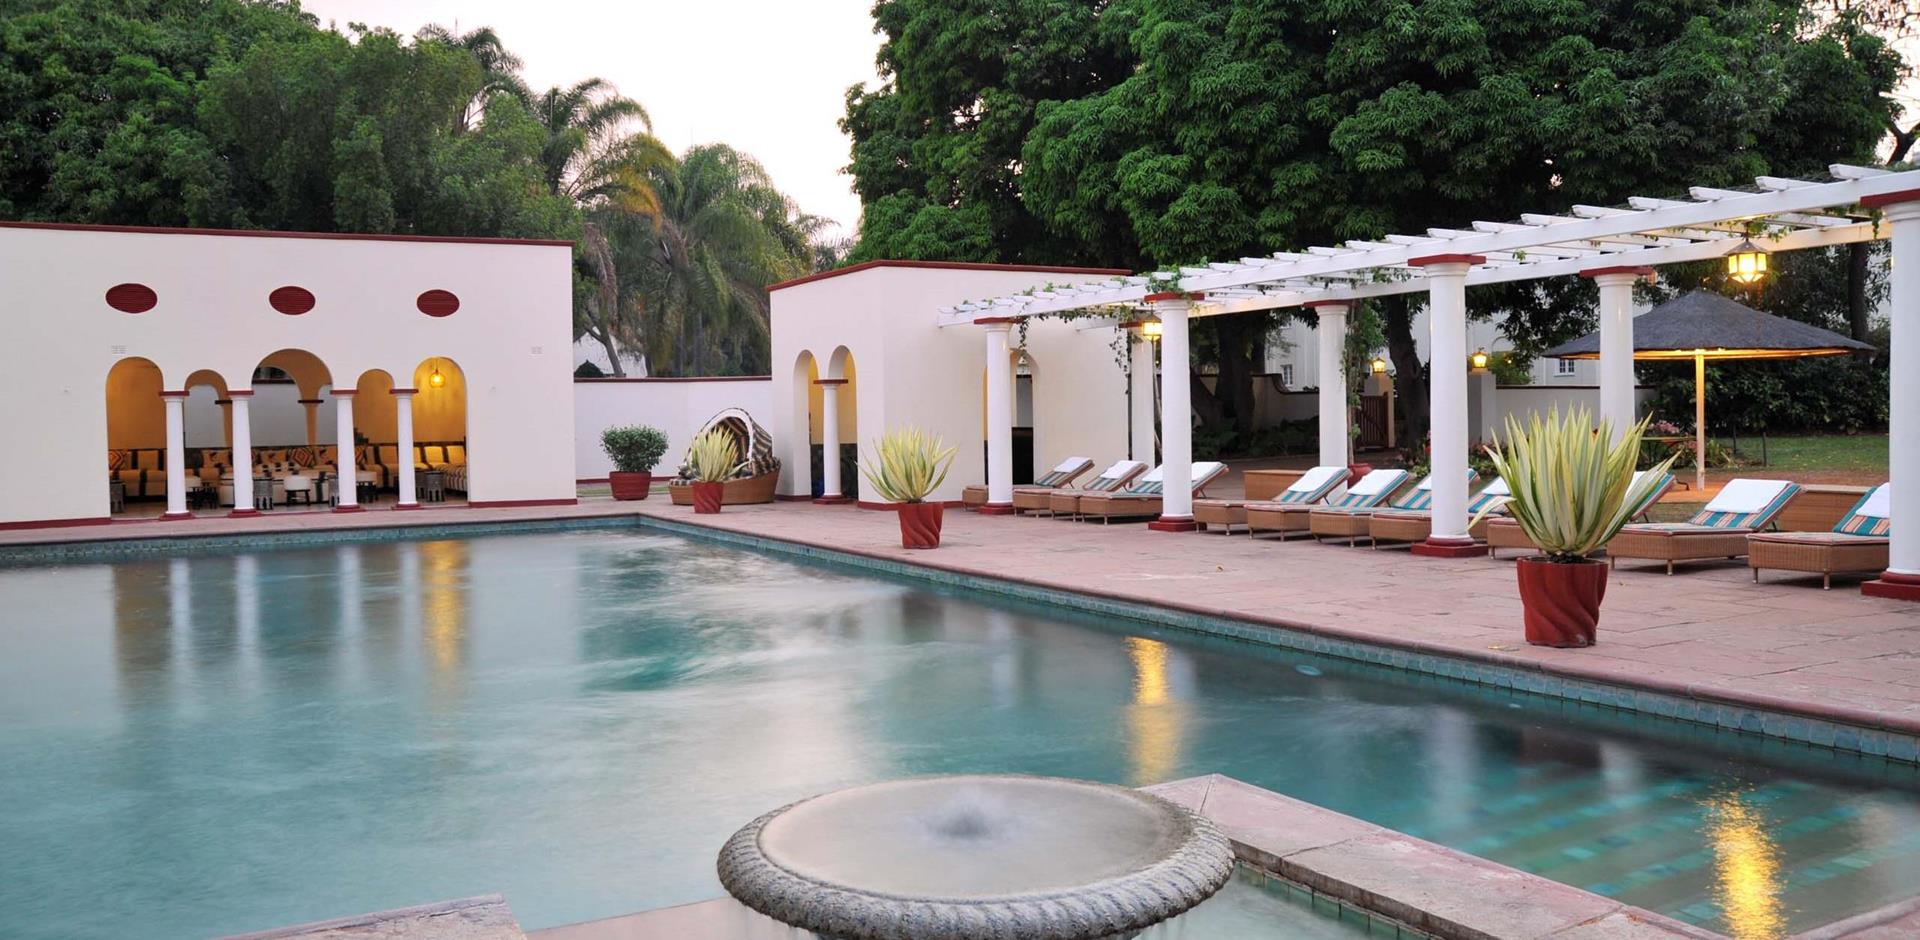 Pool, The Victoria Falls Hotel, Zimbabwe, A&K